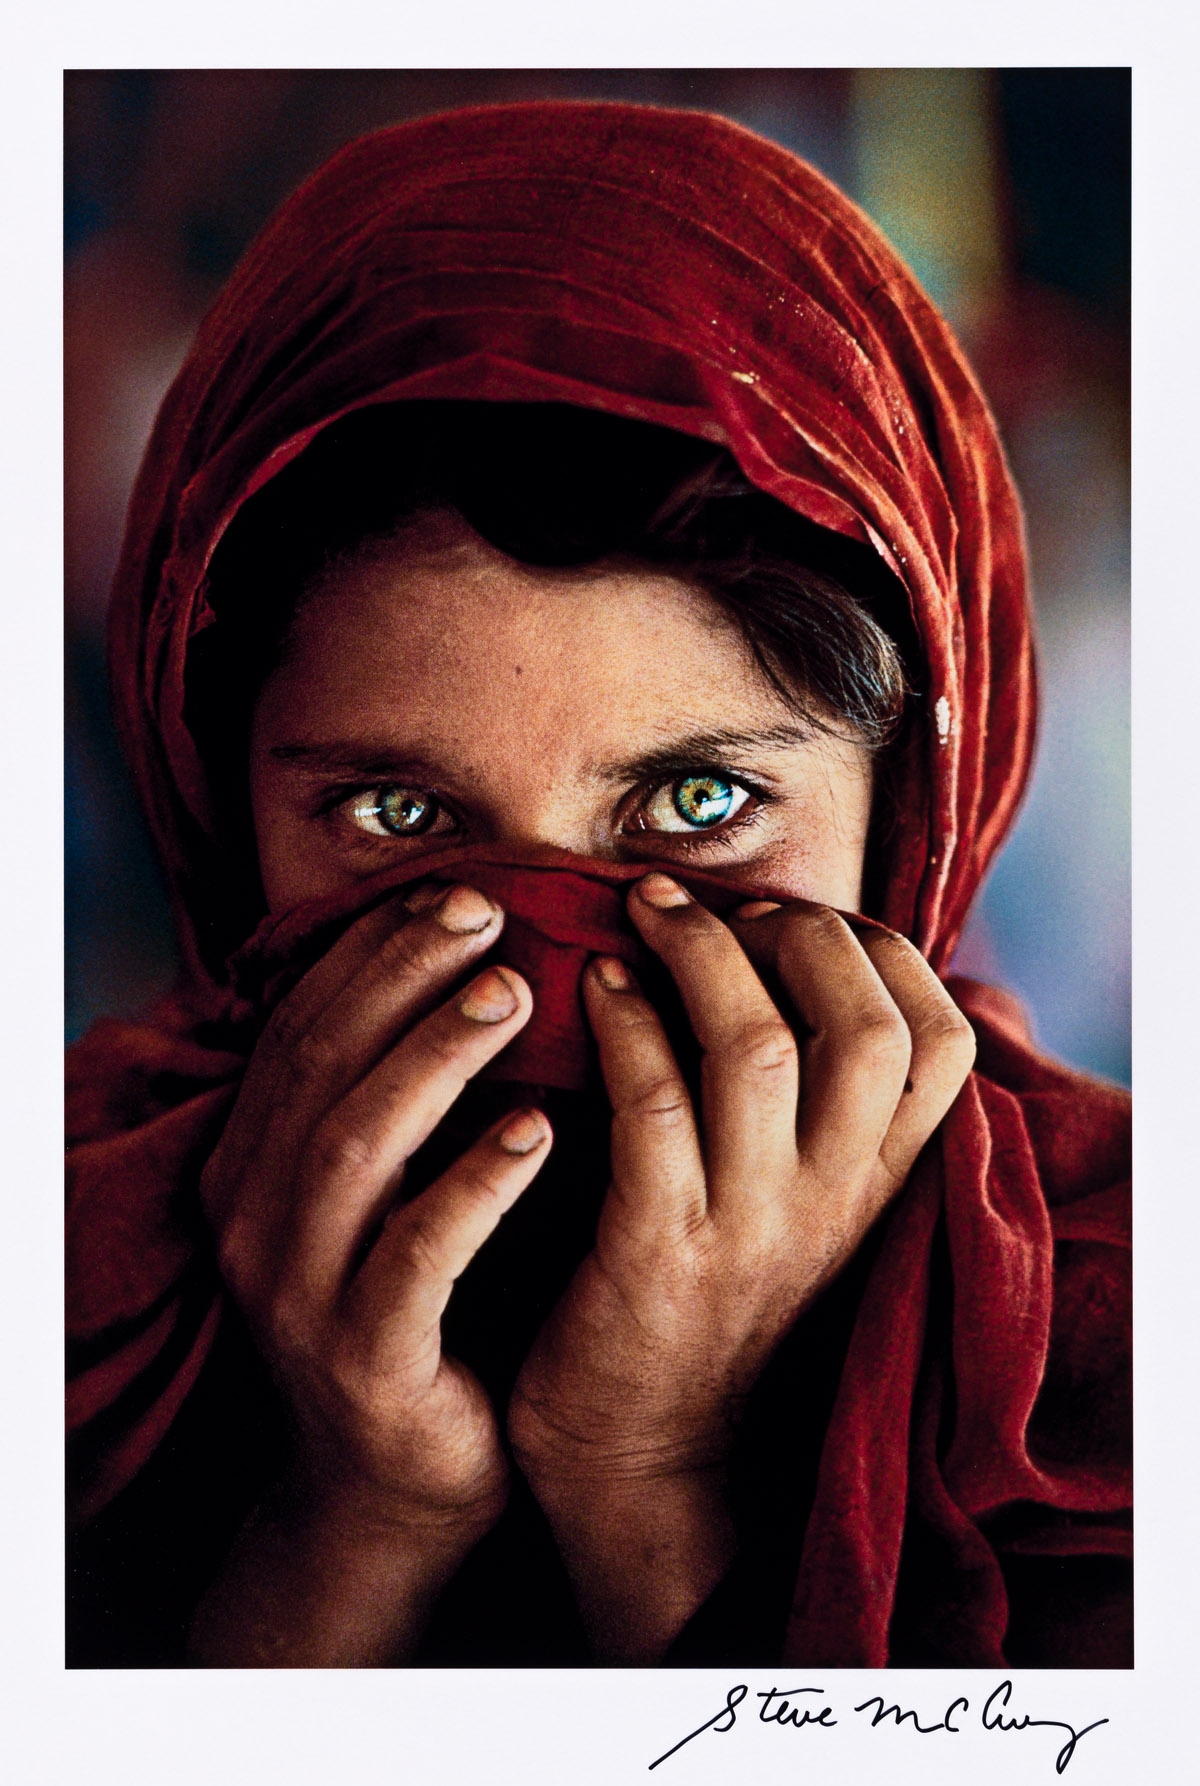 Afghan Girl (Sharbat Gula) hiding her face, Peshawar, Pakistan. by Steve McCurry, printed 1990s